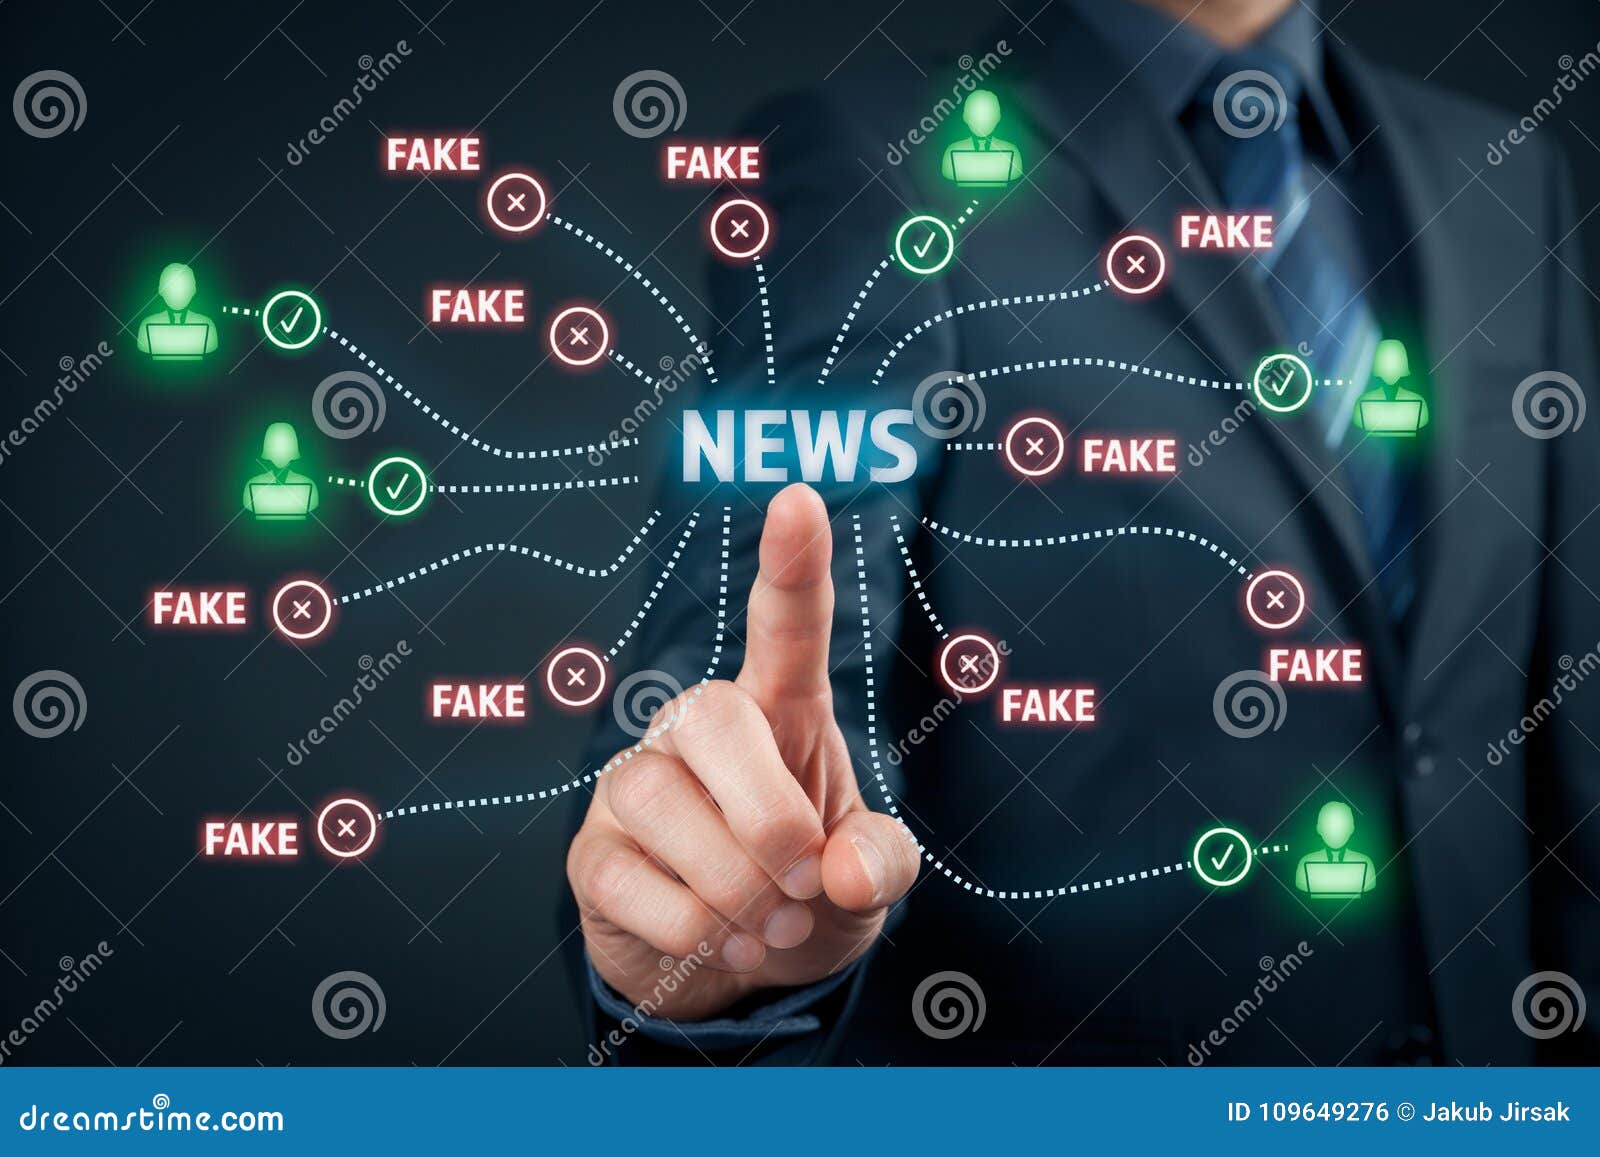 fake news concept